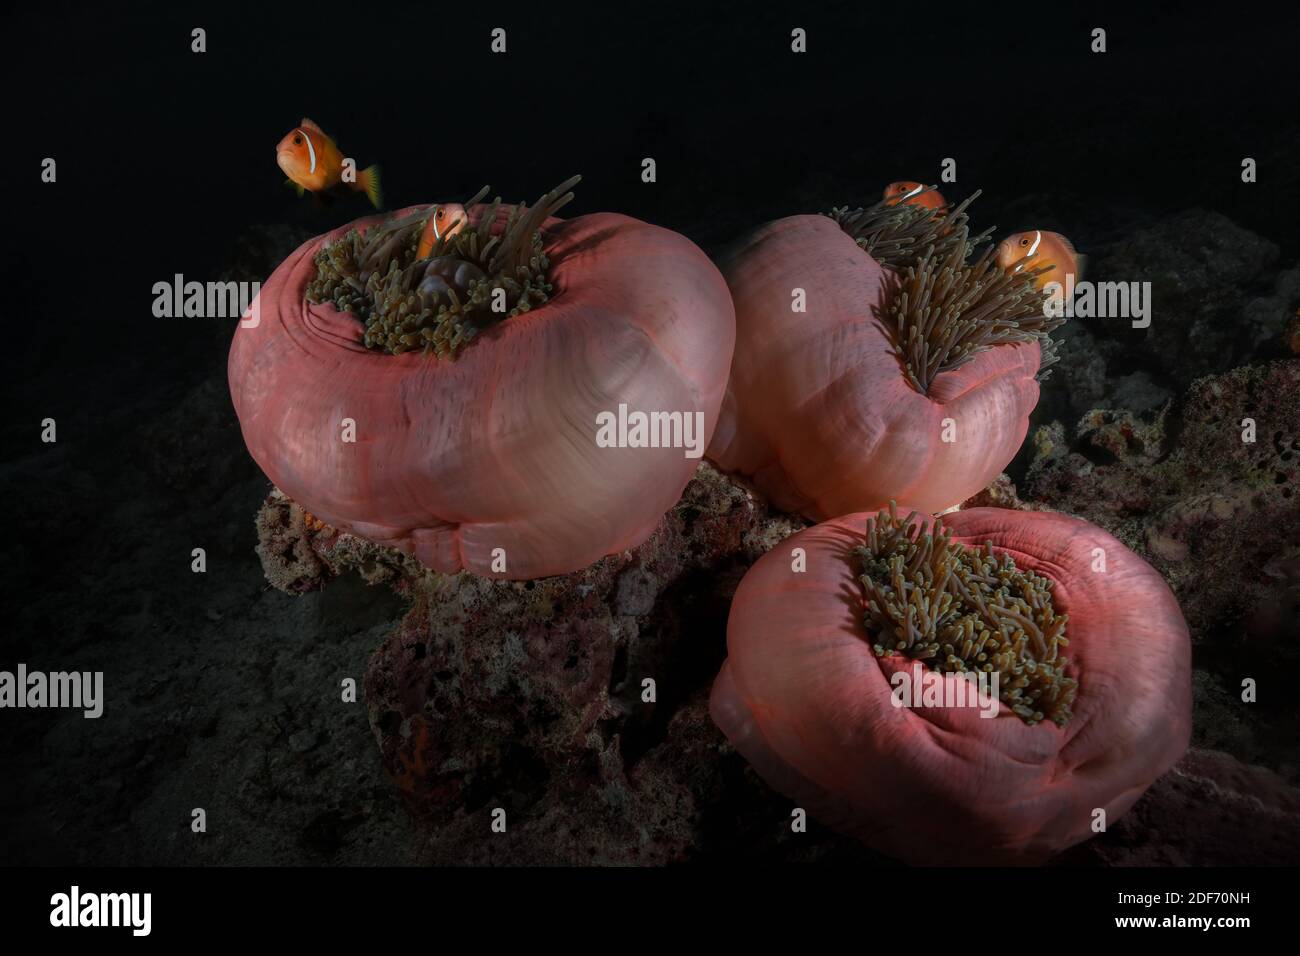 Anemona peces mutualismos simbióticos con anémonas marinas. Maravilloso y hermoso mundo submarino de Maldivas. Foto de stock